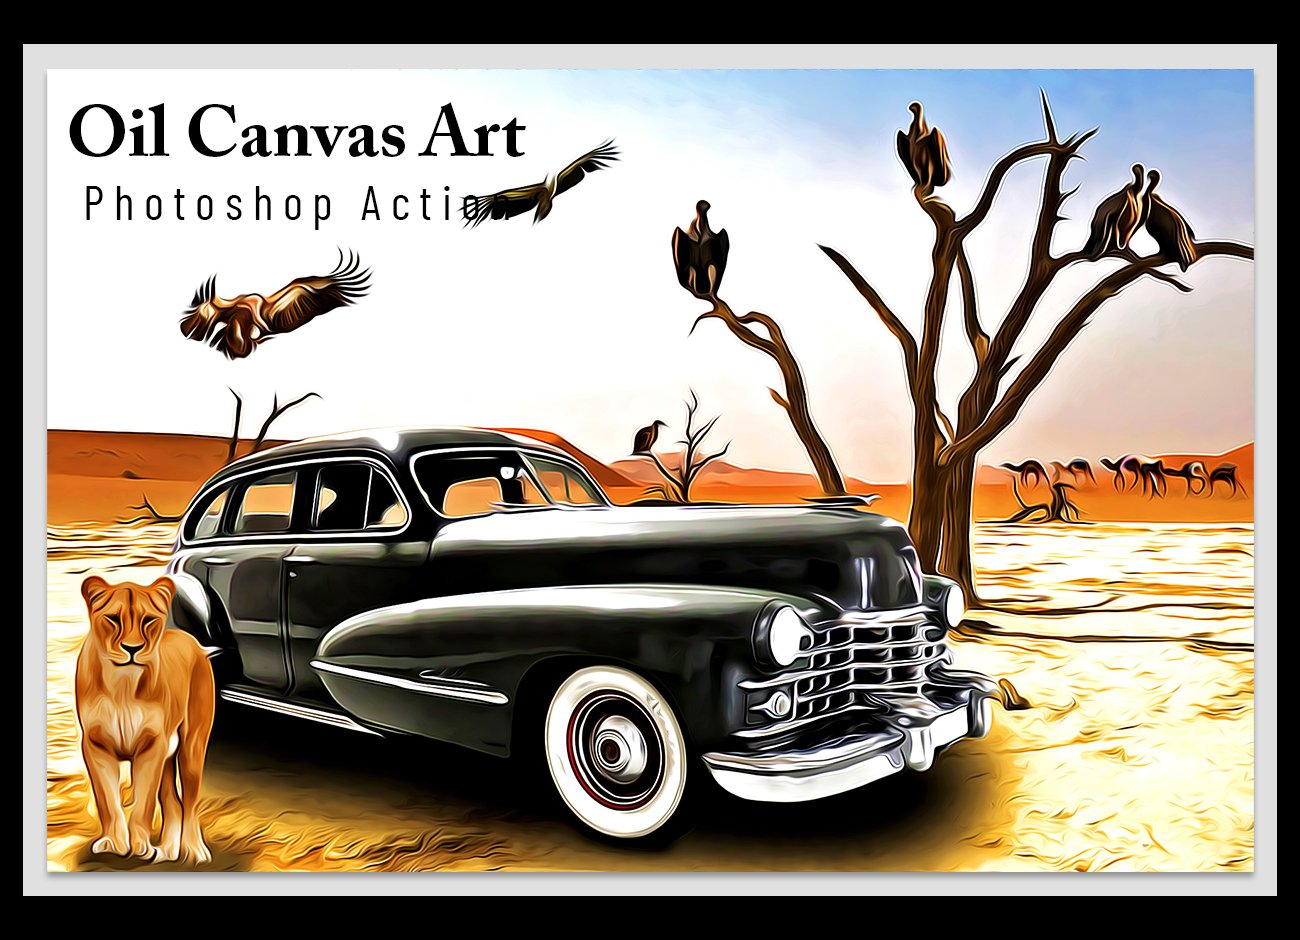 Oil Canvas Art Photoshop Actioncover image.